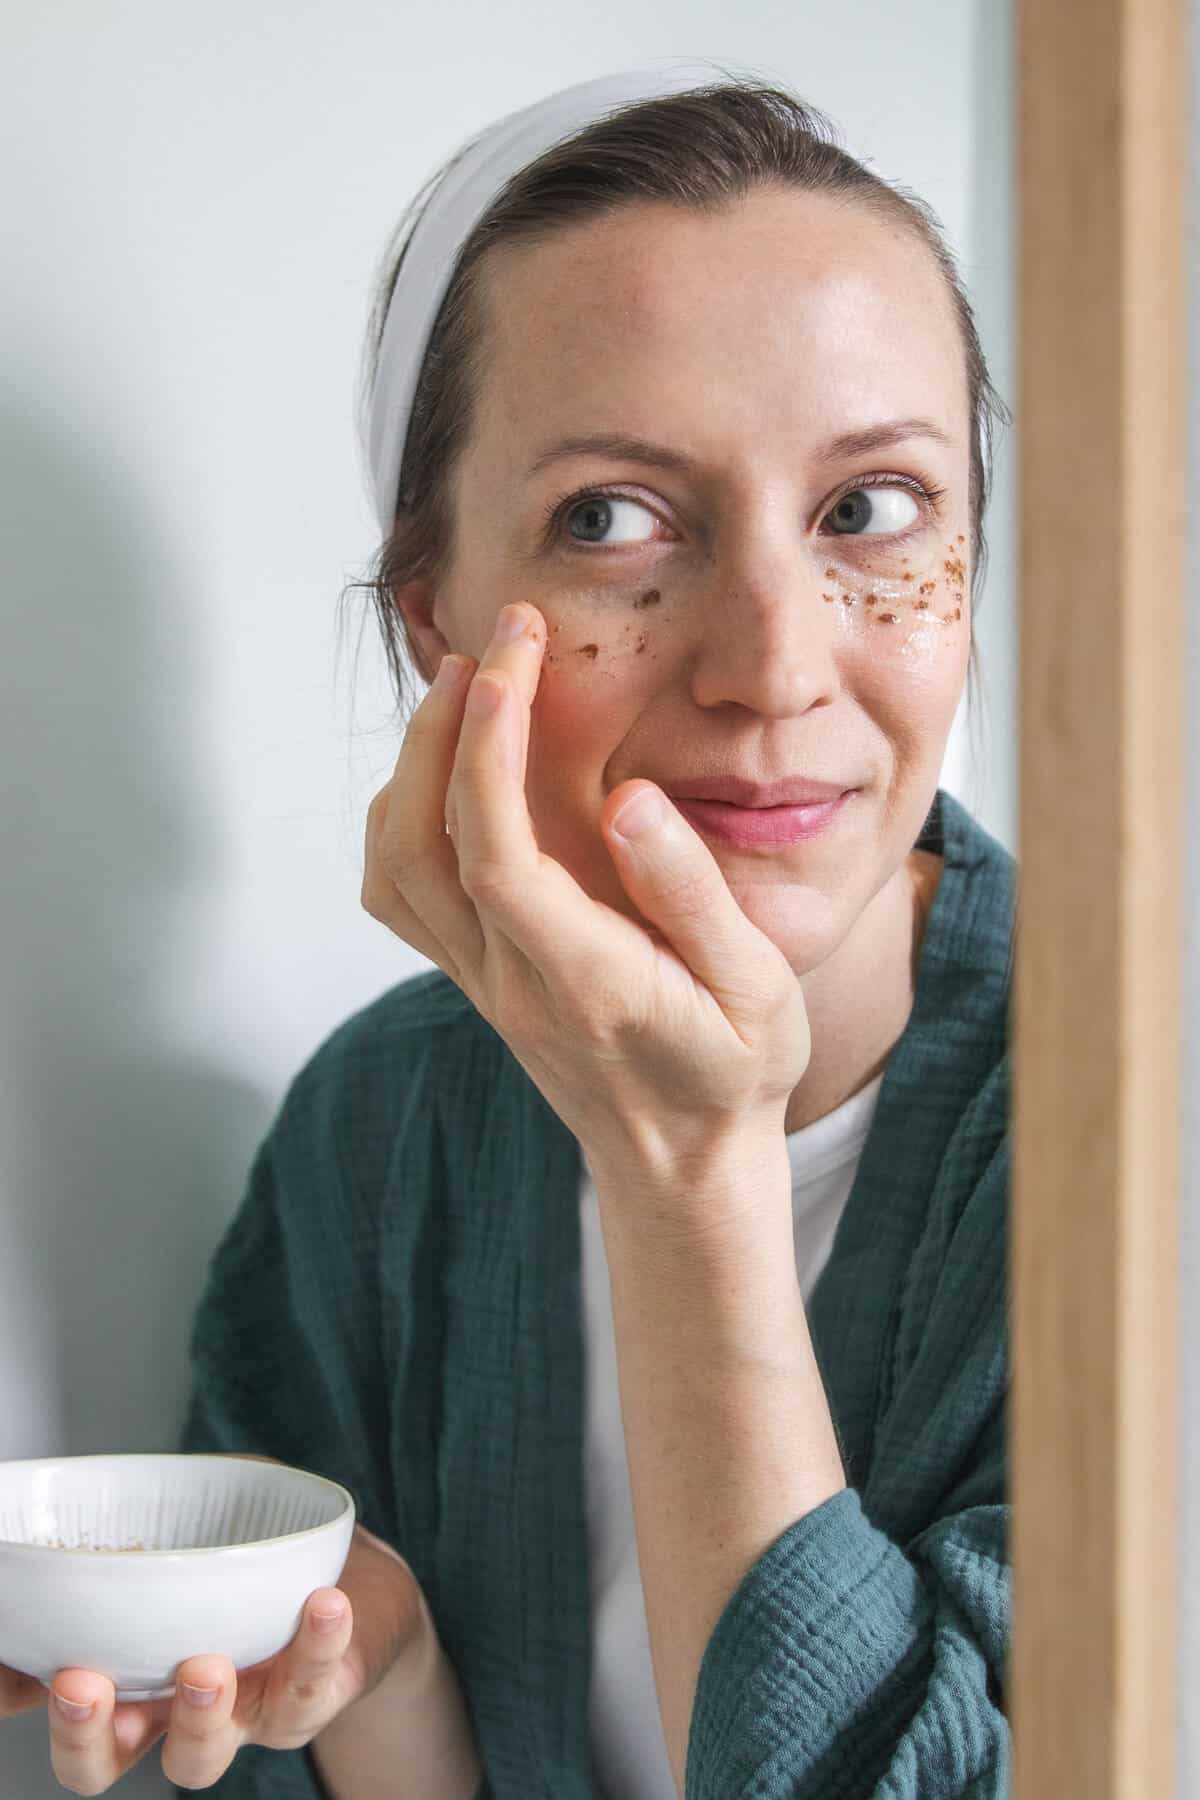 Apply flax eye mask to under eye area